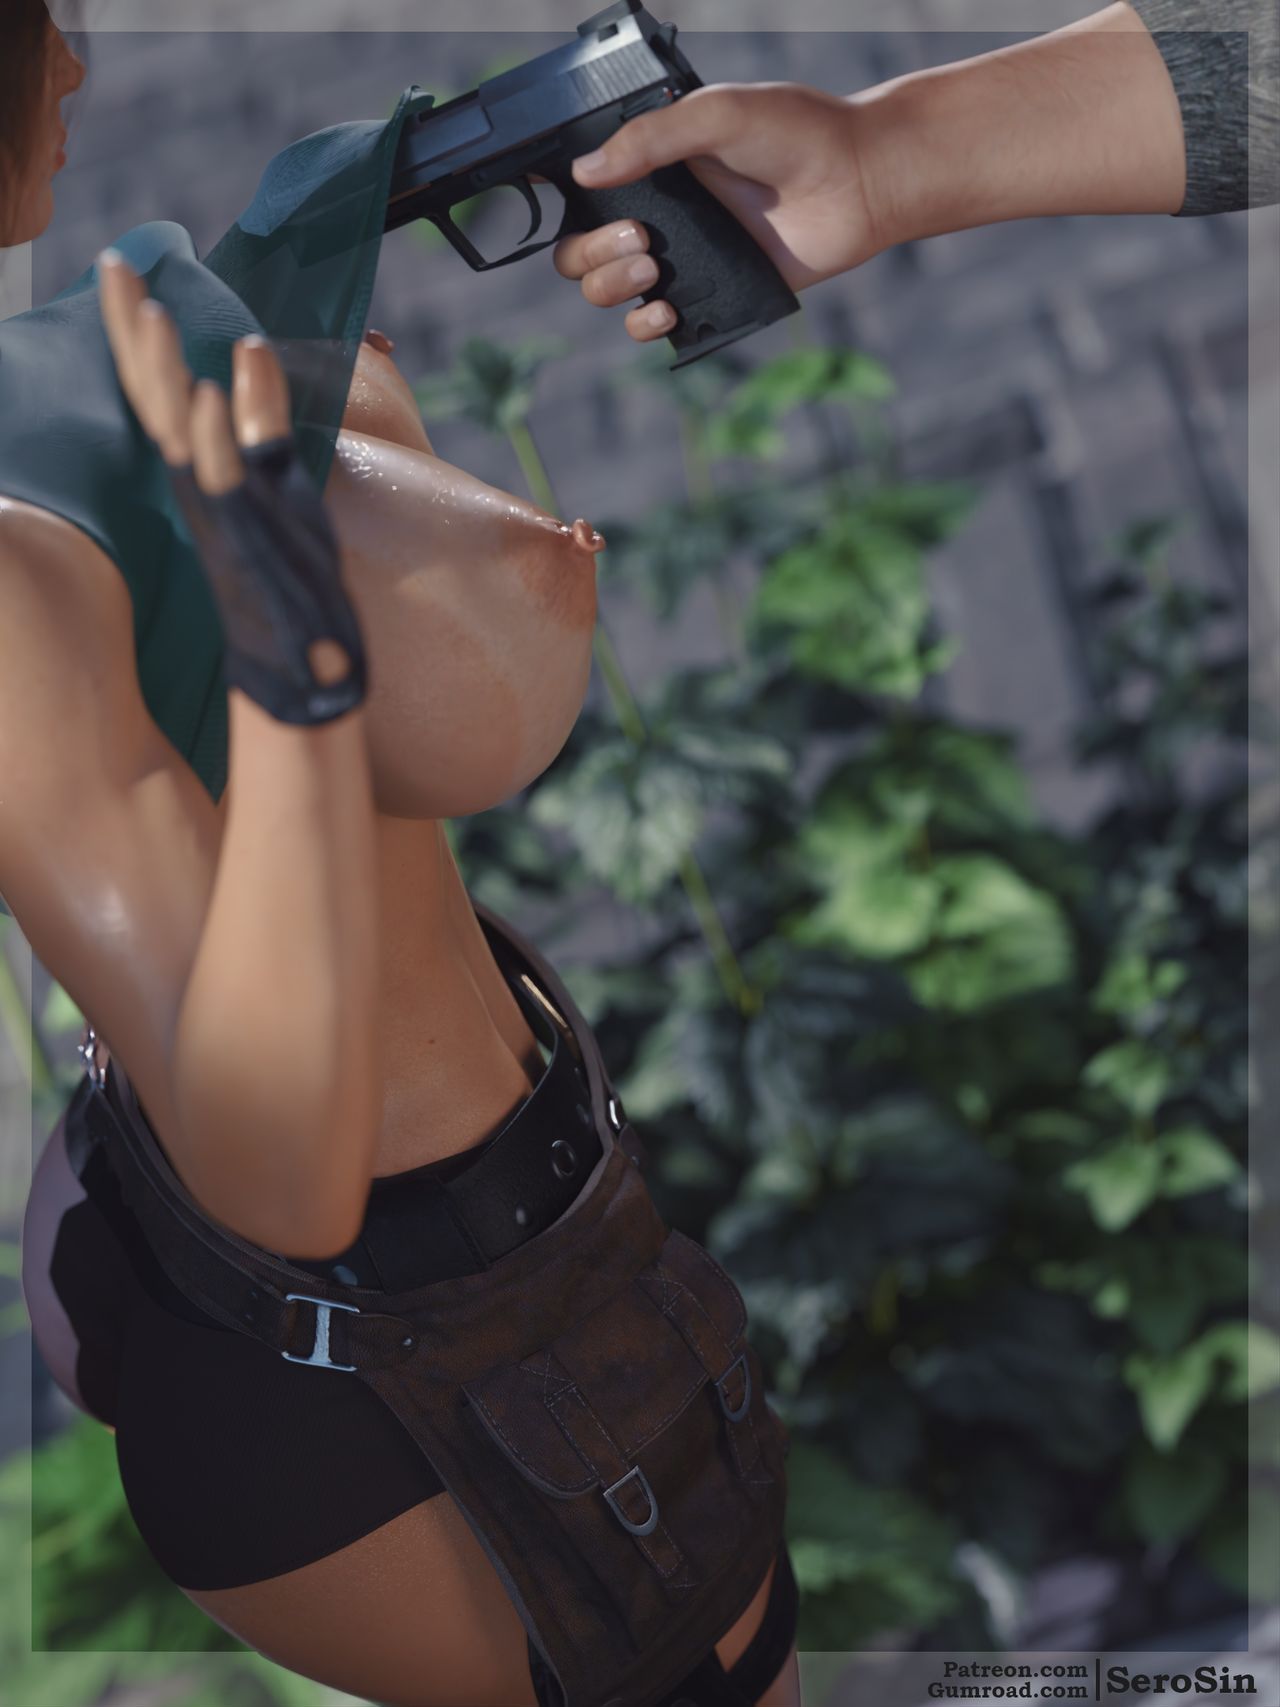 [SeroSin] Lara Croft: Captured 11